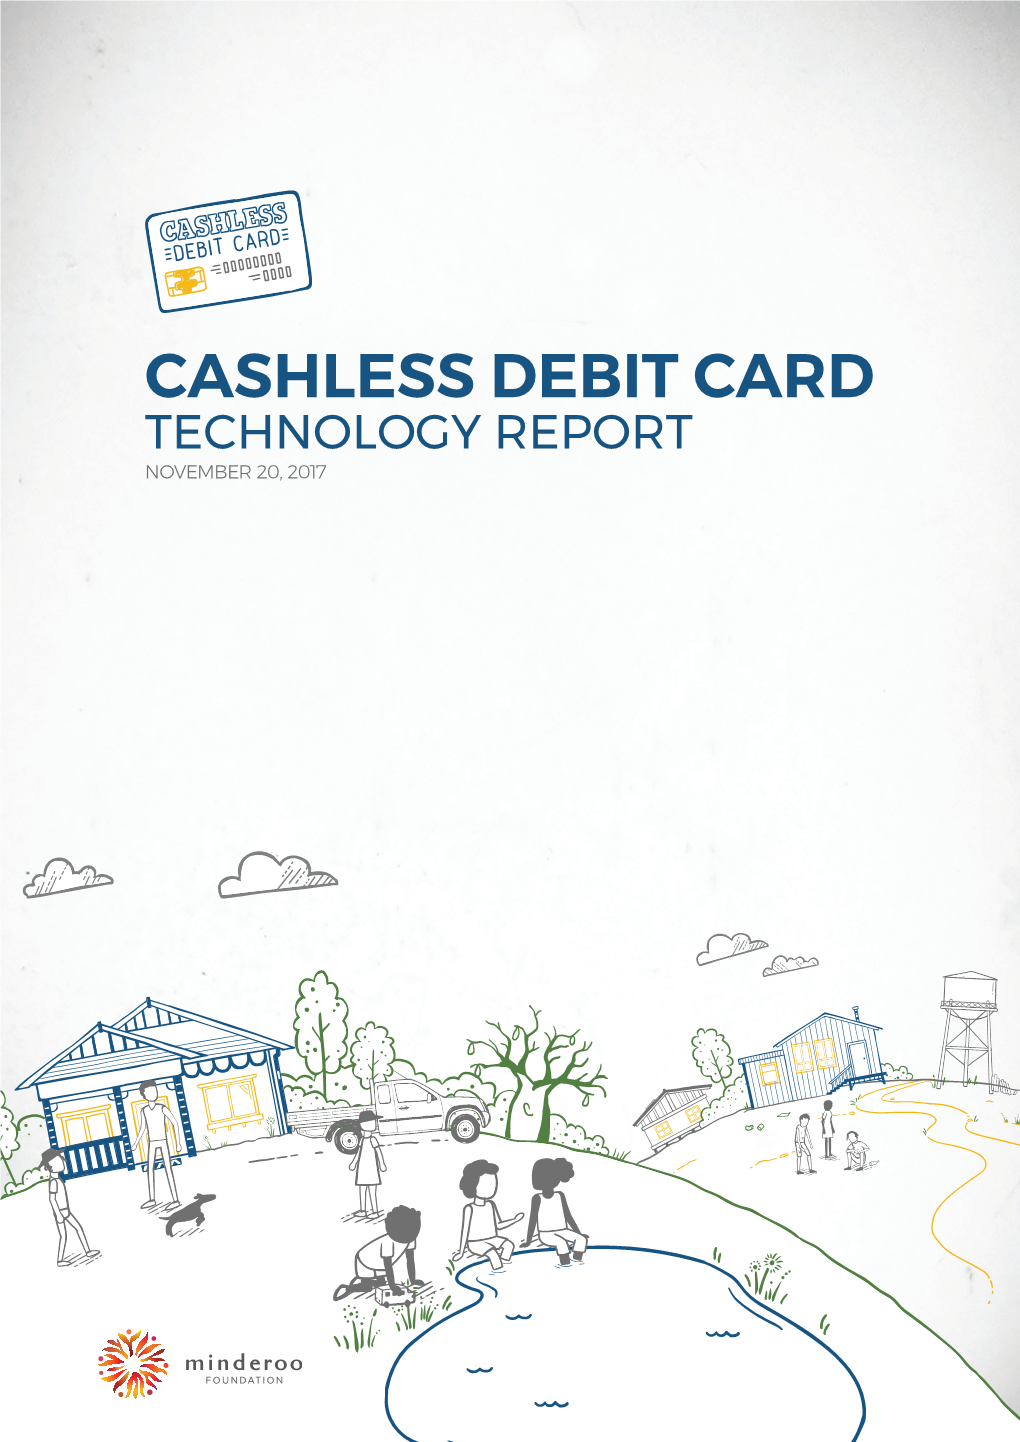 Cashless Debit Card Technology Report November 20, 2017 Contents